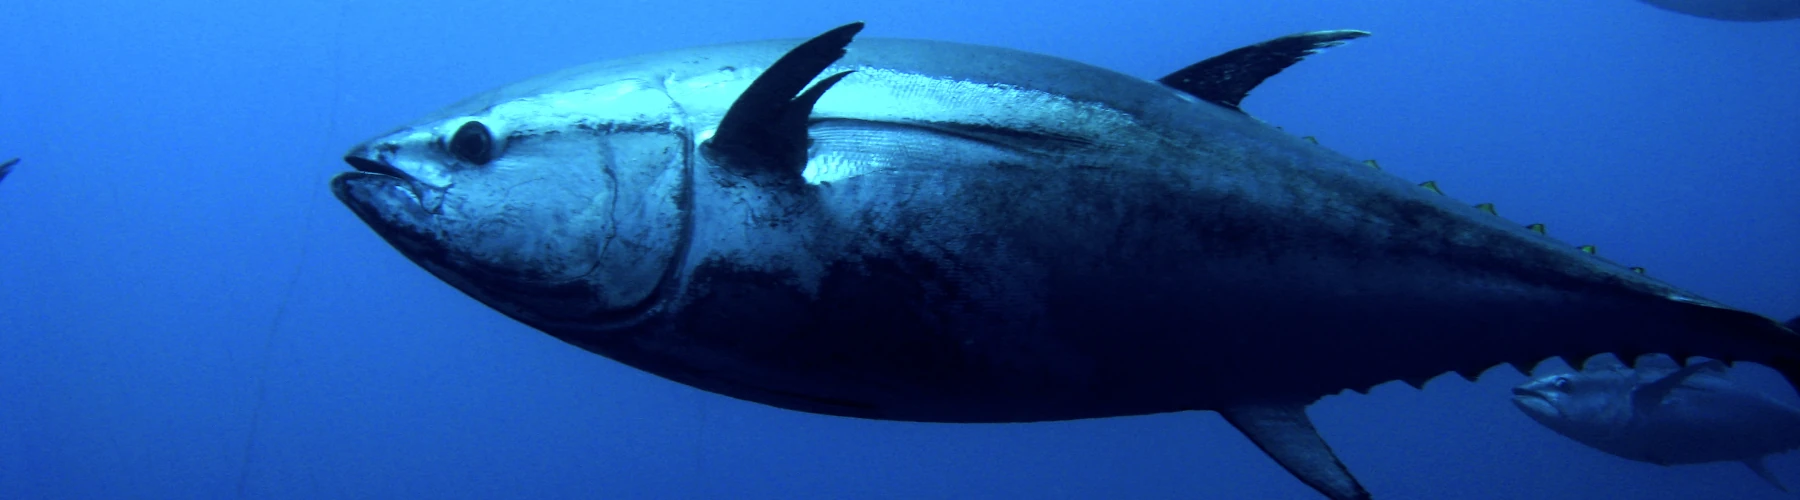 A bluefin tuna swimming underwater